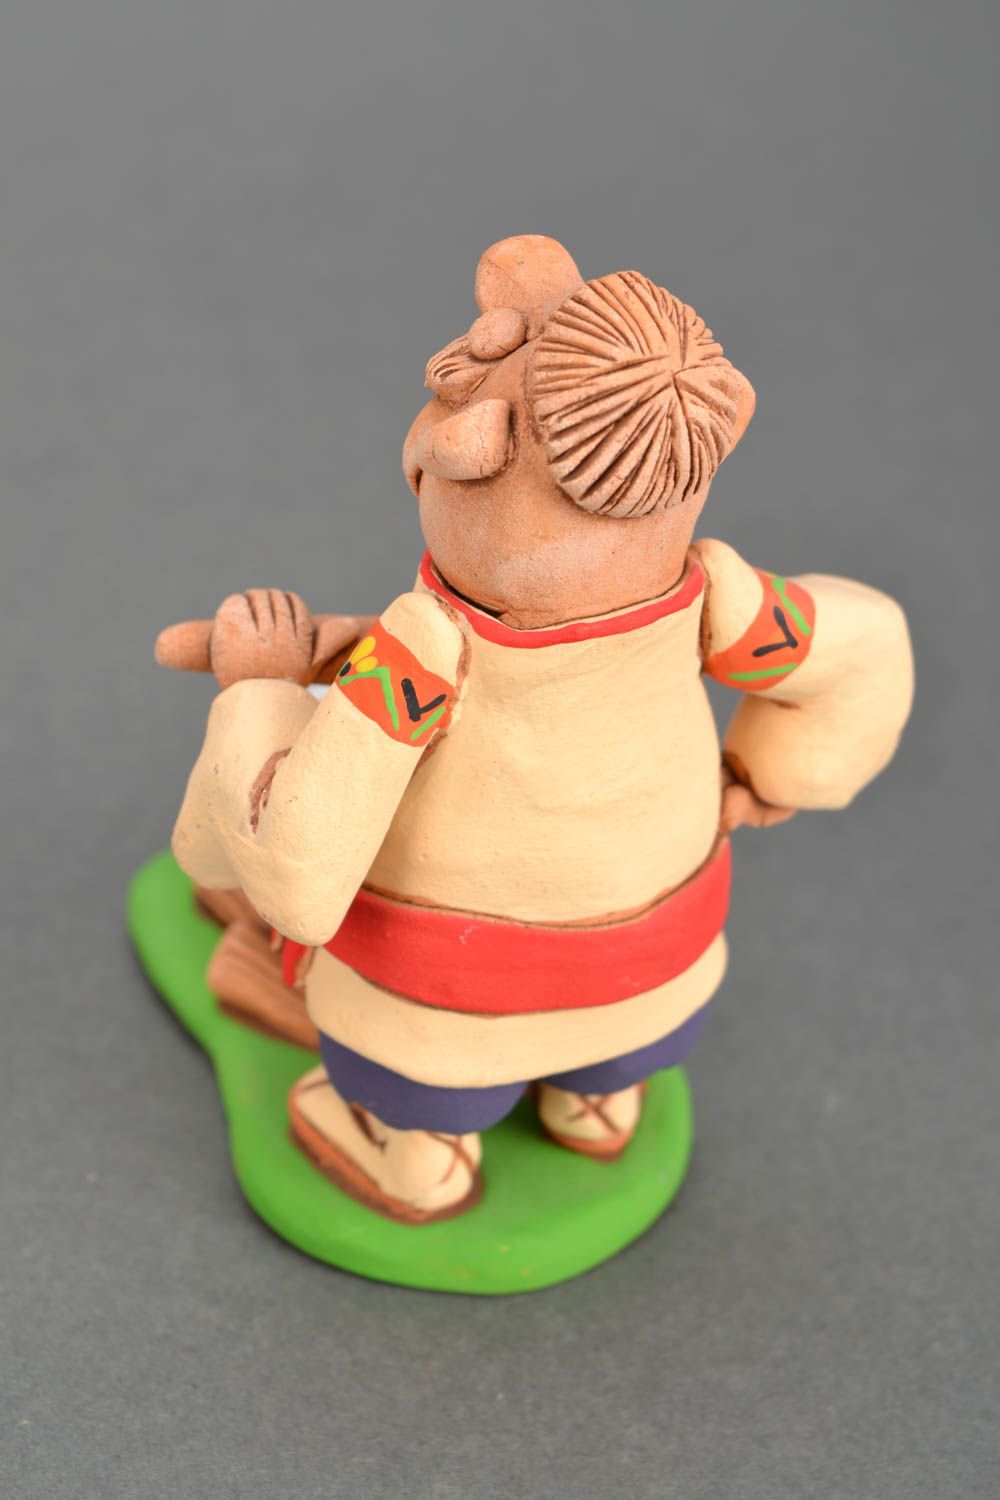 Statuina in ceramica fatta a mano figurina divertente souvenir di argilla foto 4